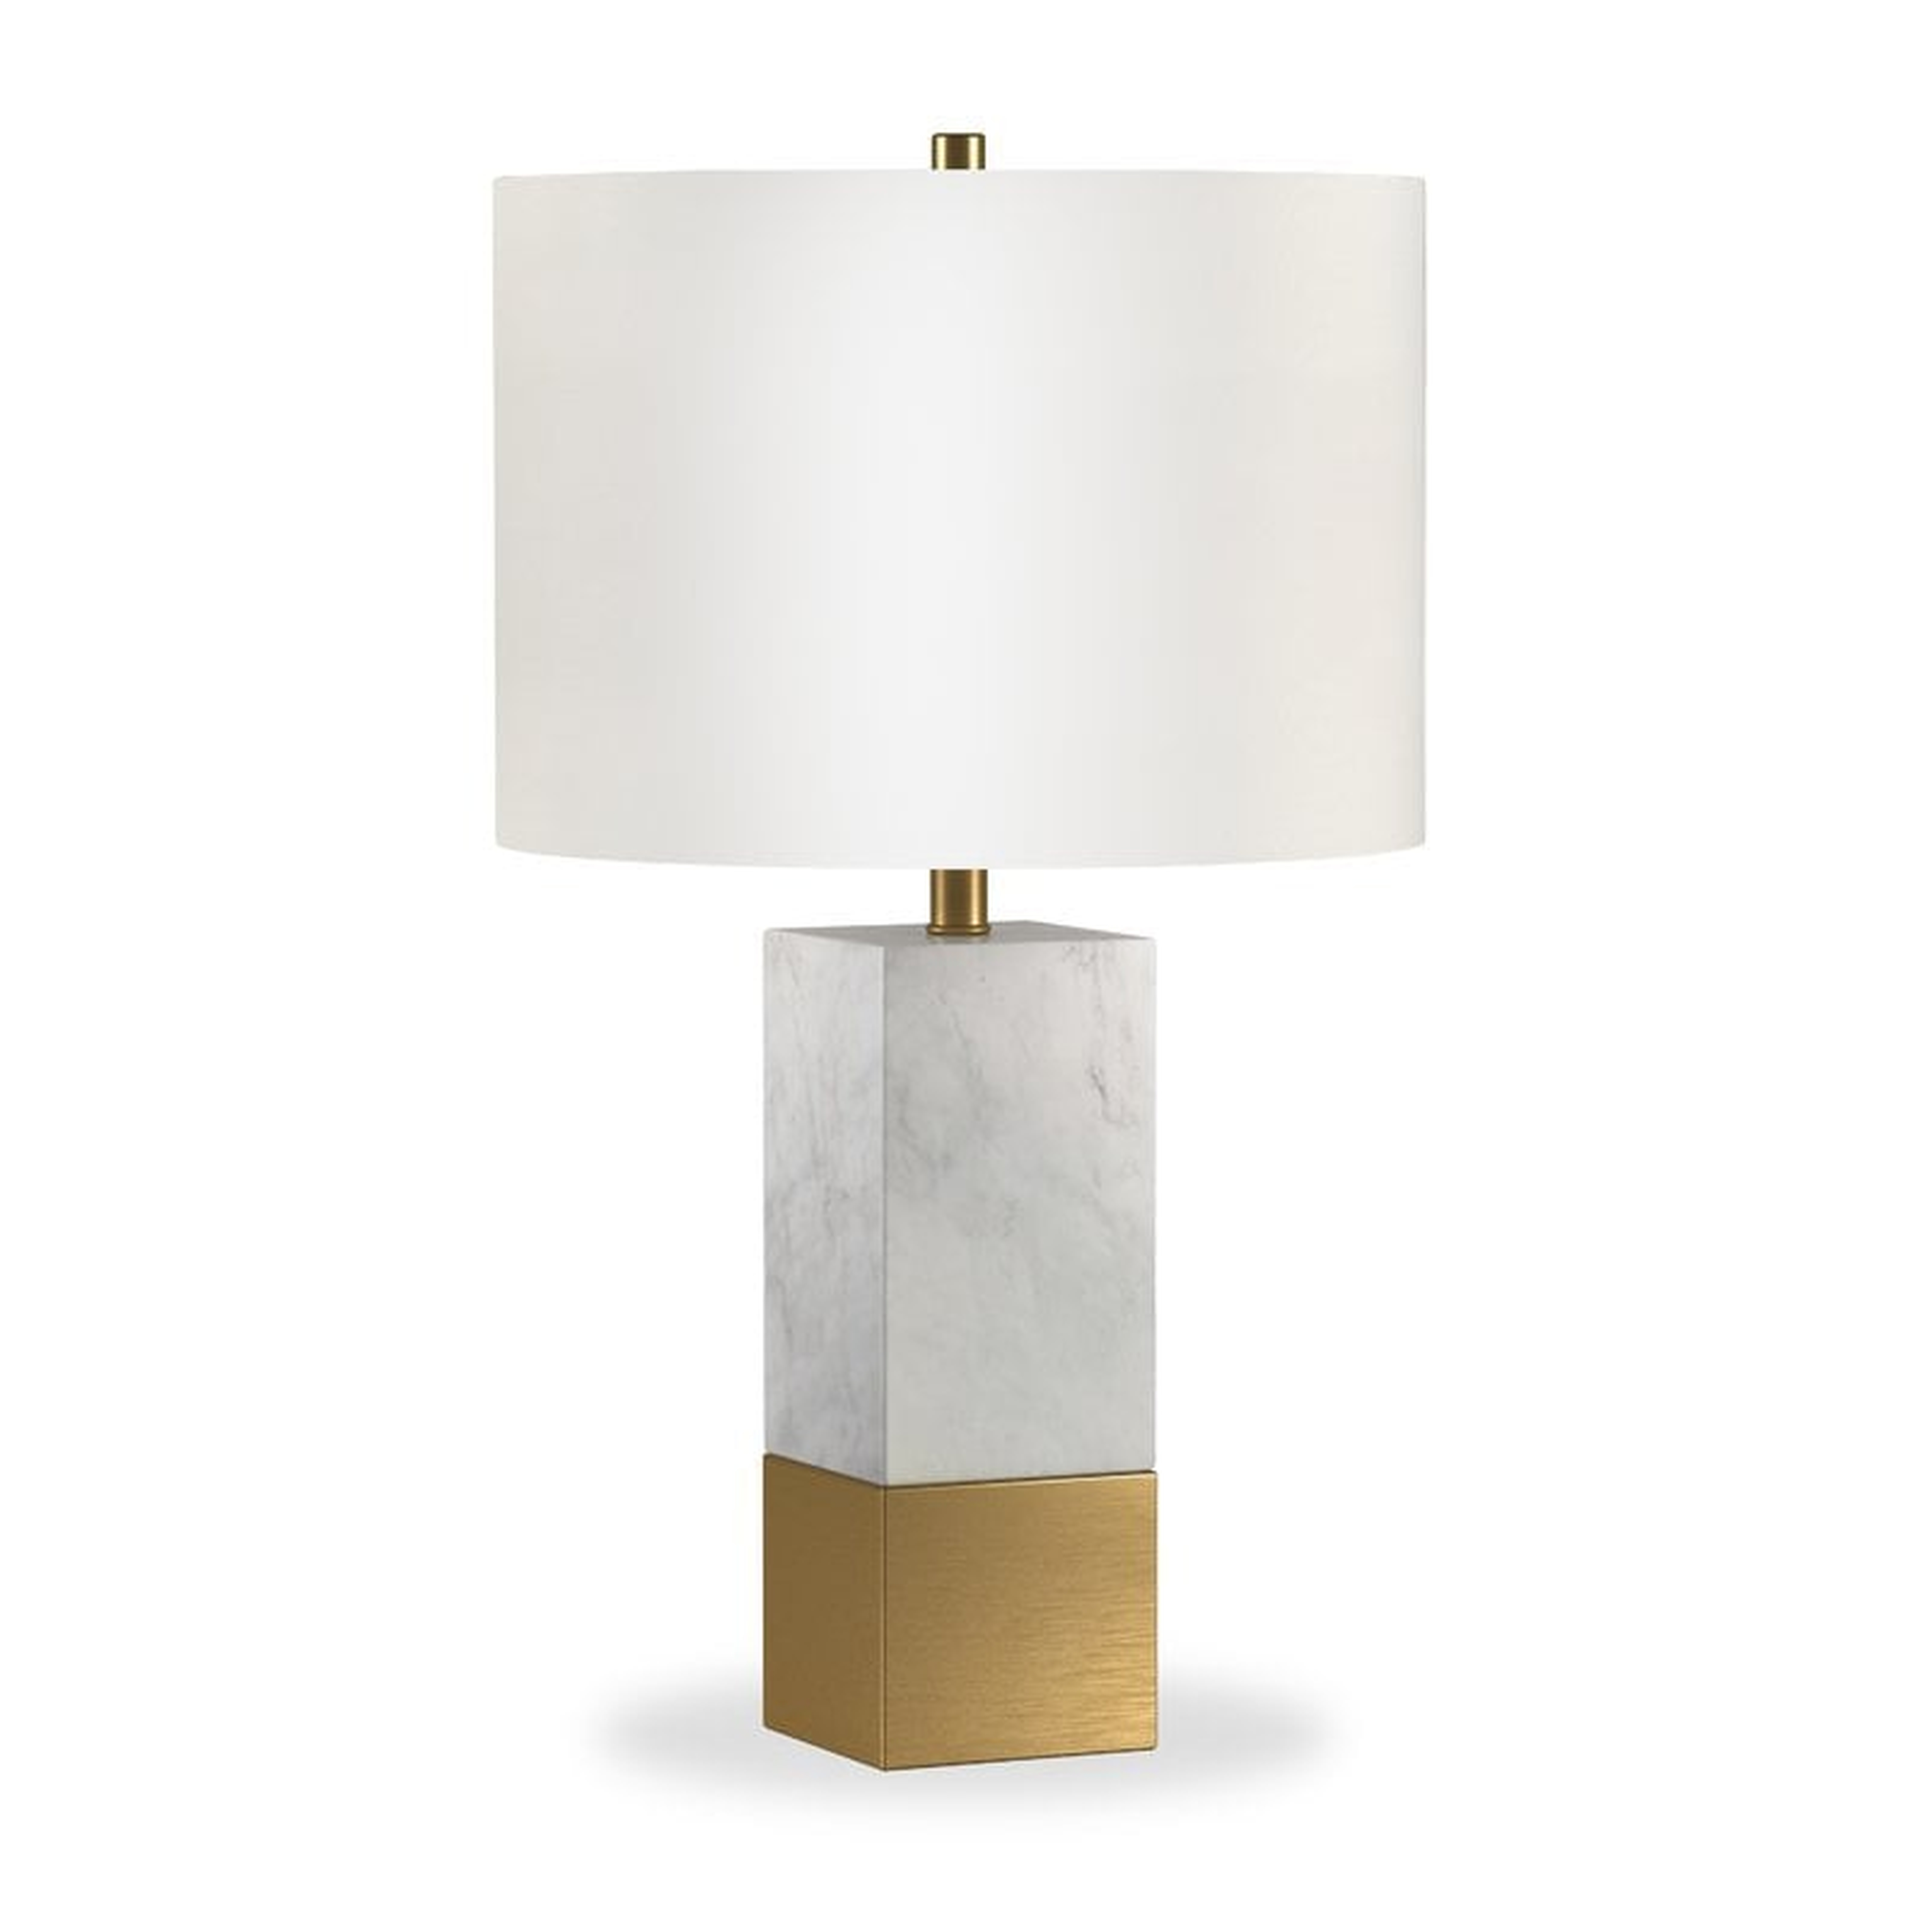 Herrell 22" Table Lamp - Wayfair